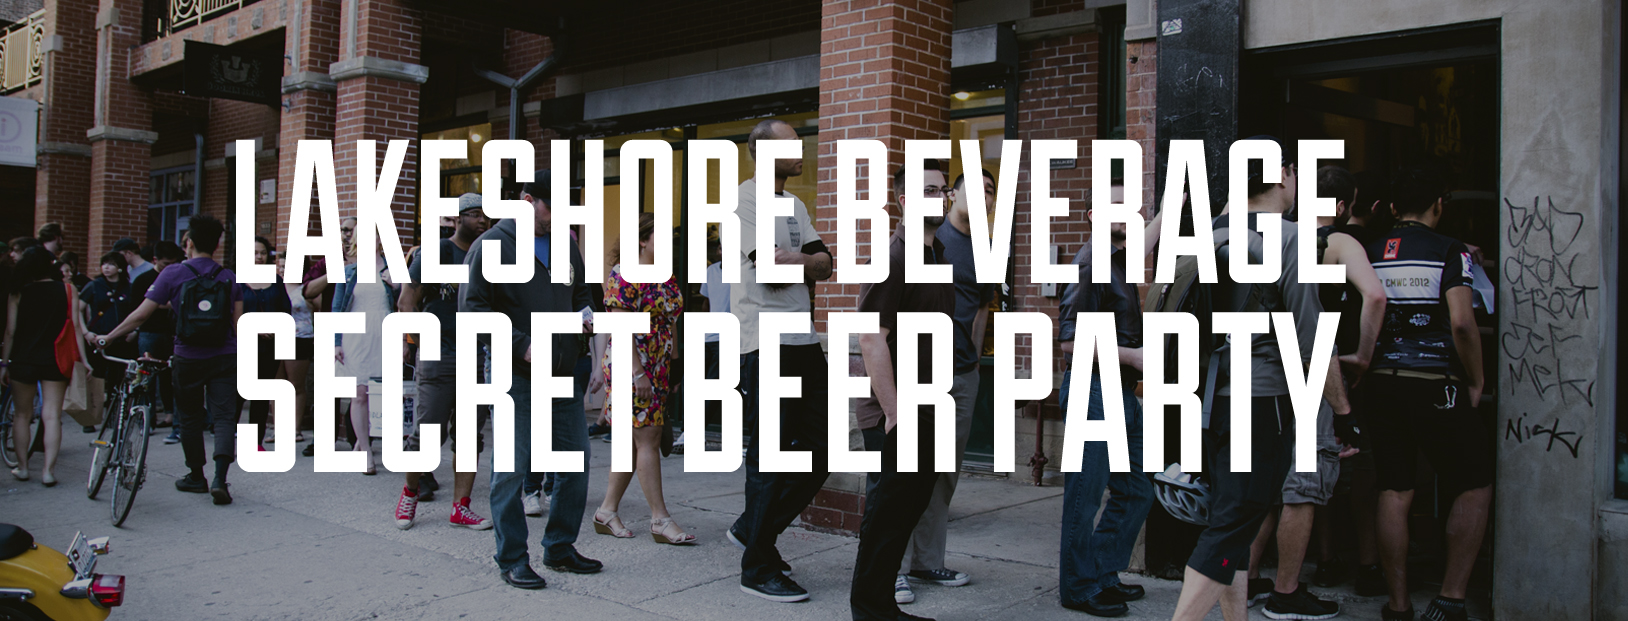 Lakeshore Beverage Secret Beer Parties